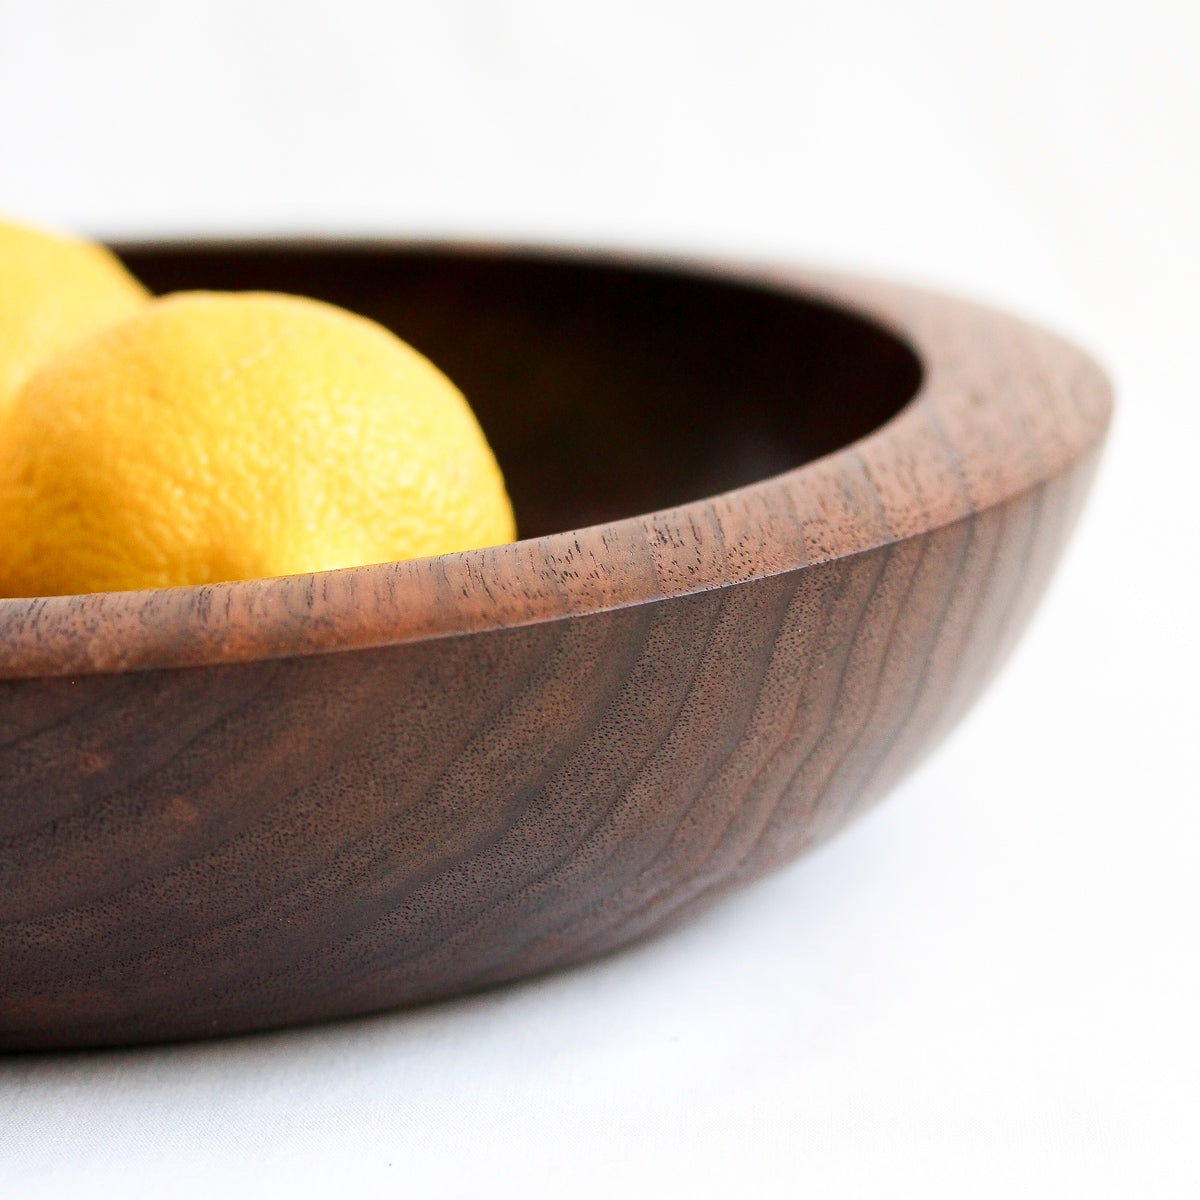 Black Walnut Fruit Bowl with Undercut Rim